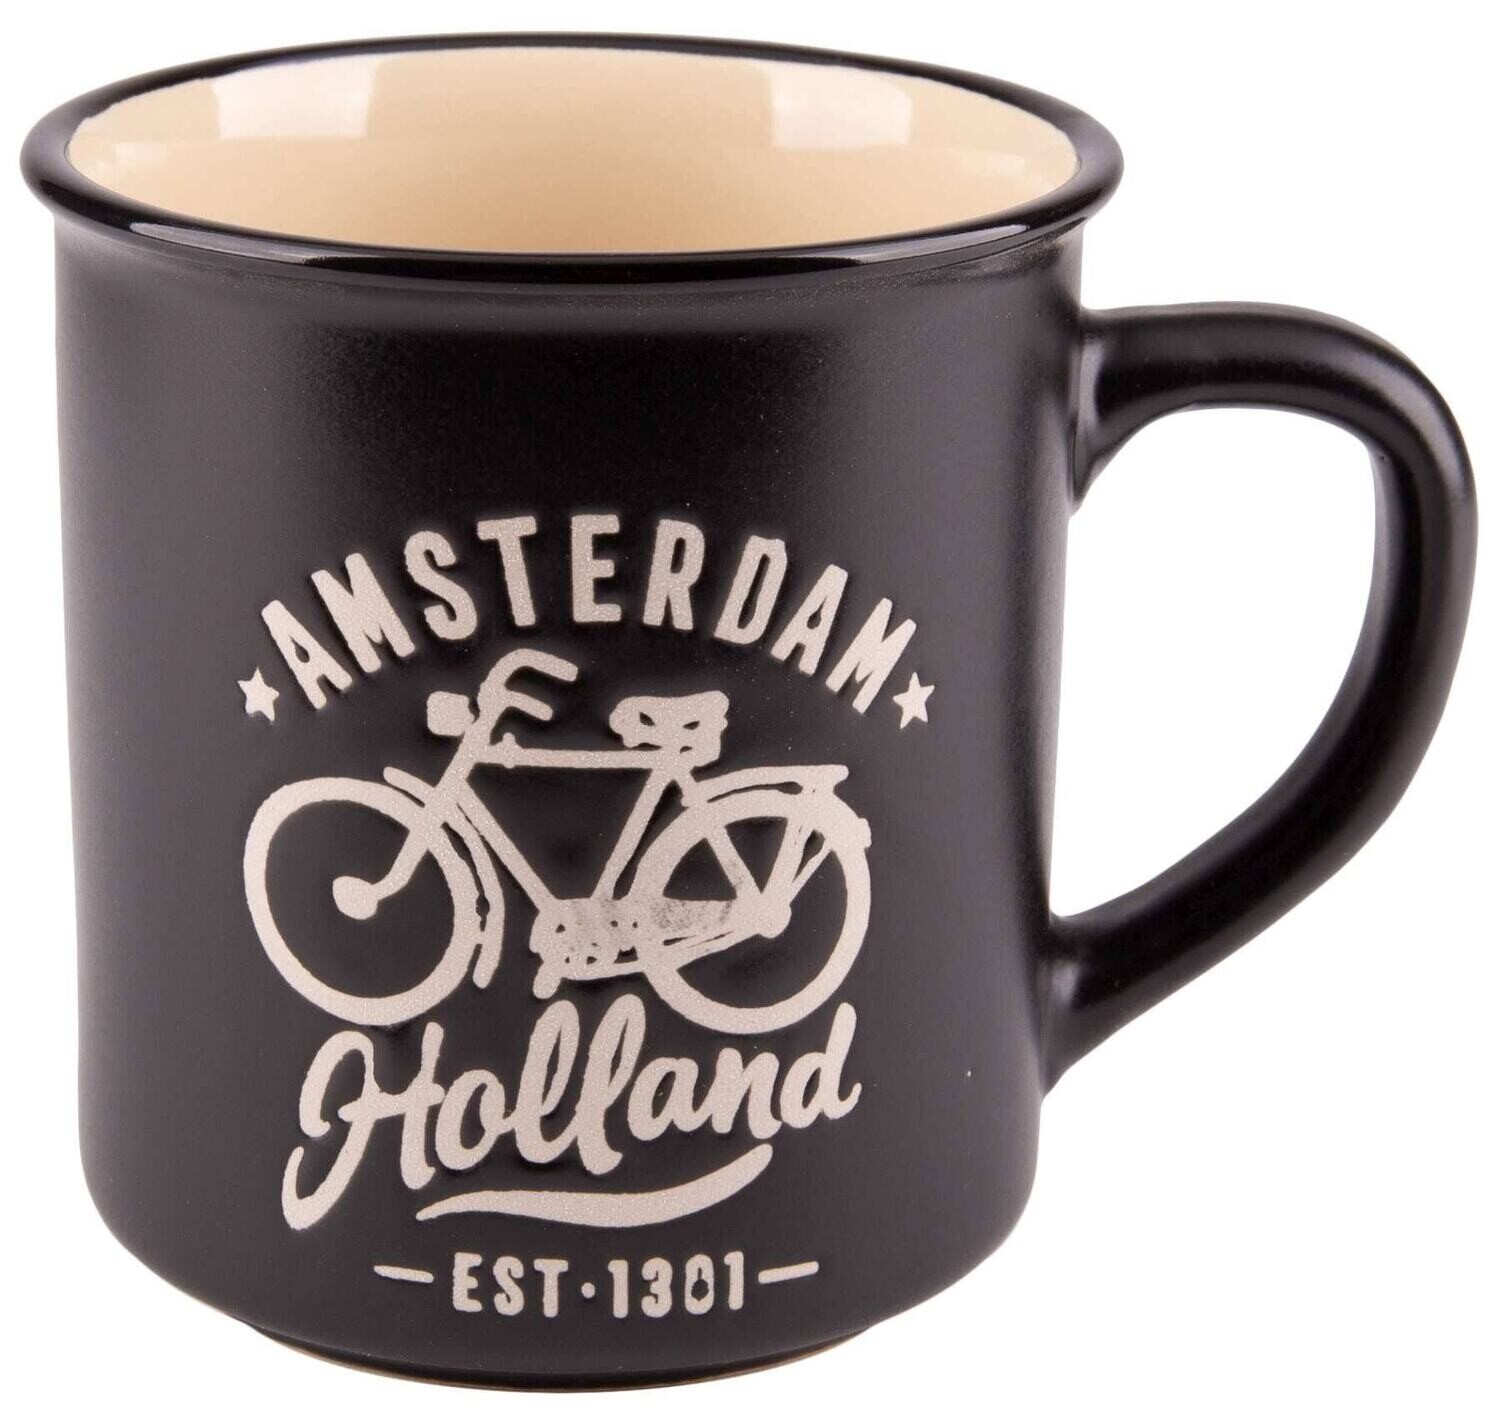 Ceramic mug 330ml coffee, tea mug #0734